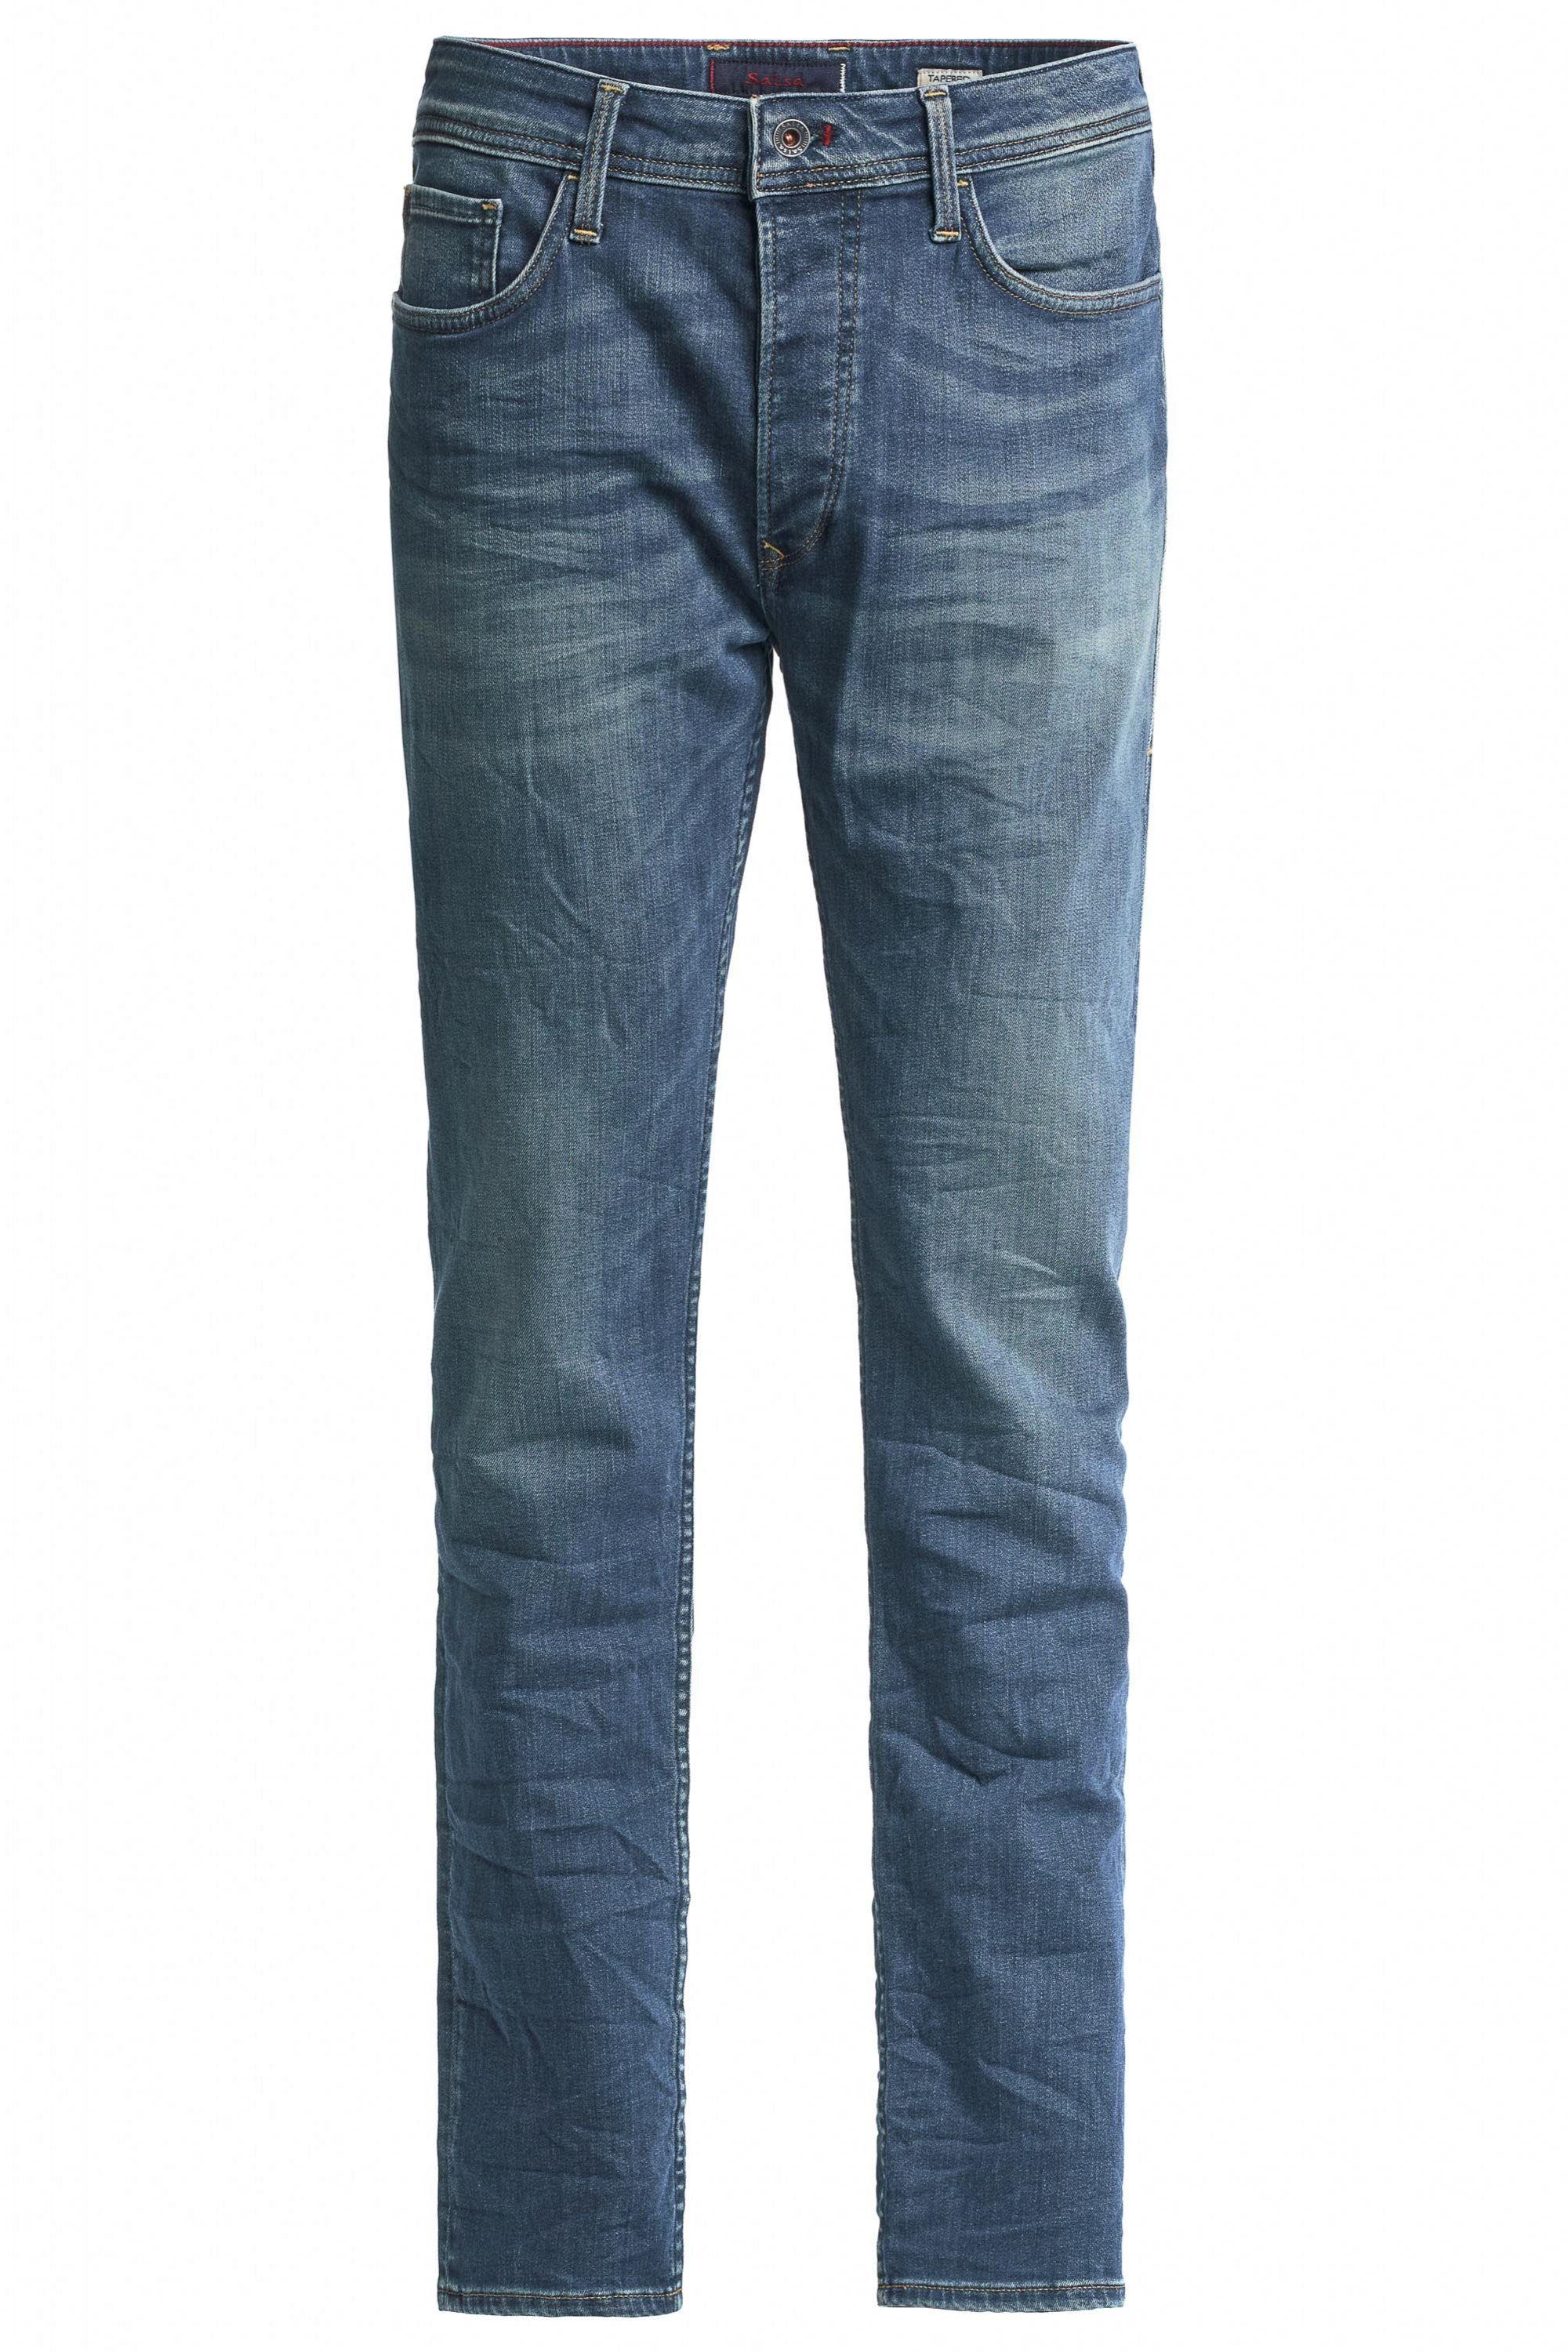 Schlussverkauf Salsa 5-Pocket-Jeans SALSA JEANS blue mid washed LIMA used 125226.8503